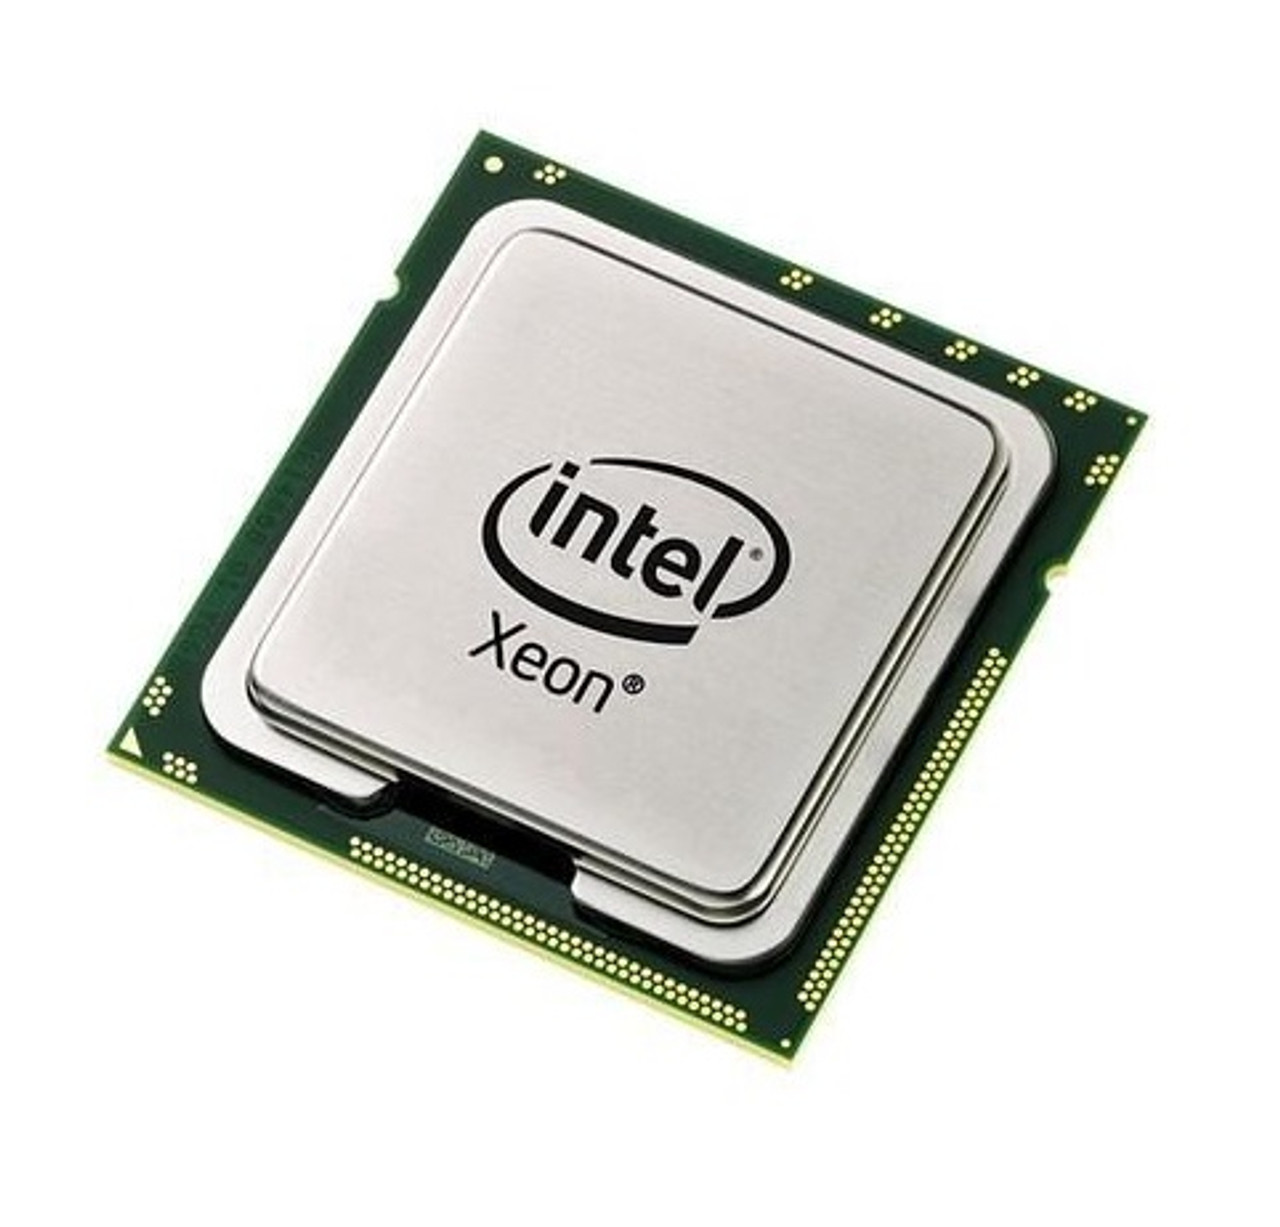 TY614 - Dell 2.66GHz 1333MHz FSB 12MB L2 Cache Intel Xeon L5430 Quad Core Processor for PowerEdge 1950, 2950 III, M600